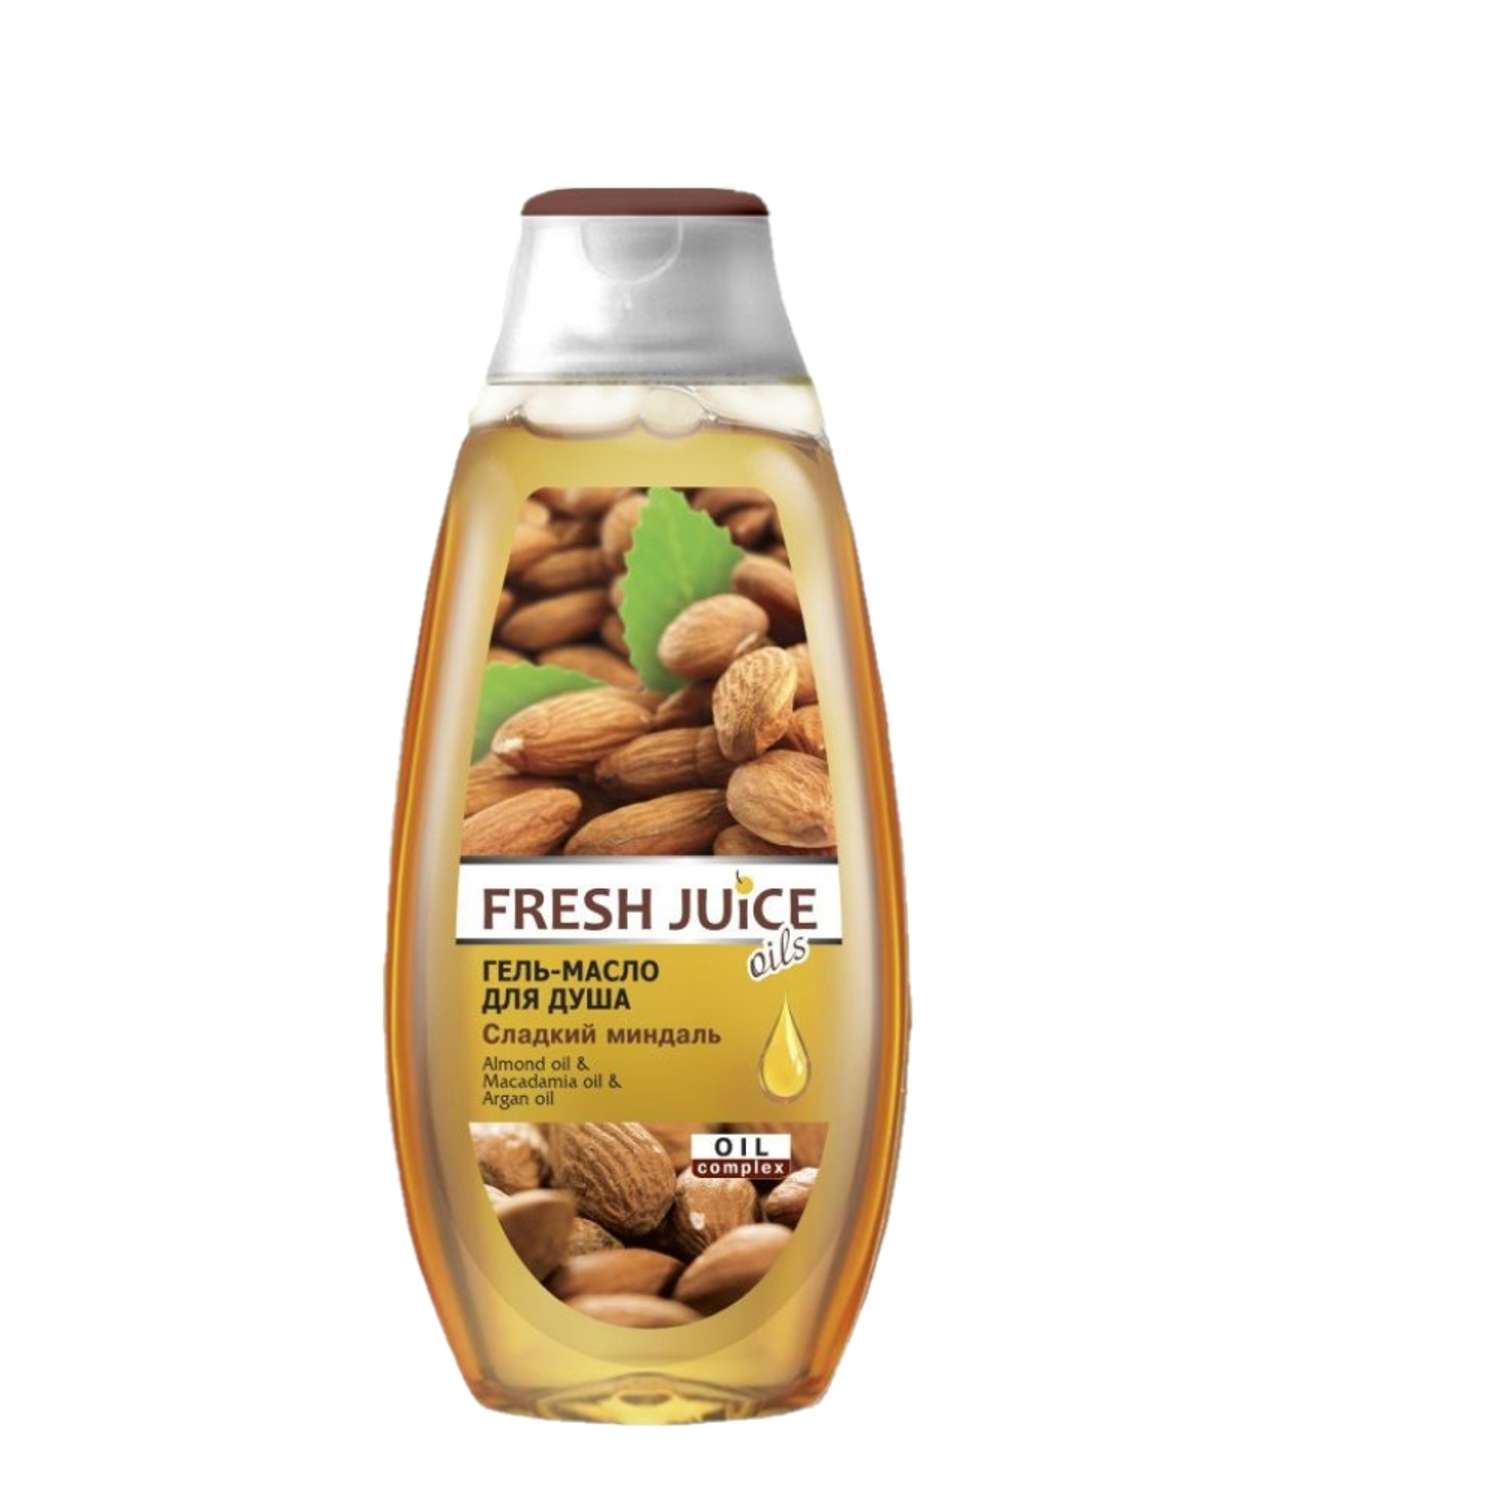 Миндальный гель для душа. Fresh Juice гель-масло для душа Sweet Almond 400мл. Fresh Juice крем-гель для душа Sweet Almond 400 мл. Фреш Джус гель для душа 400мл. "Fresh Juice"гель для душа "Lemongrass & Vanilla", 750 мл.